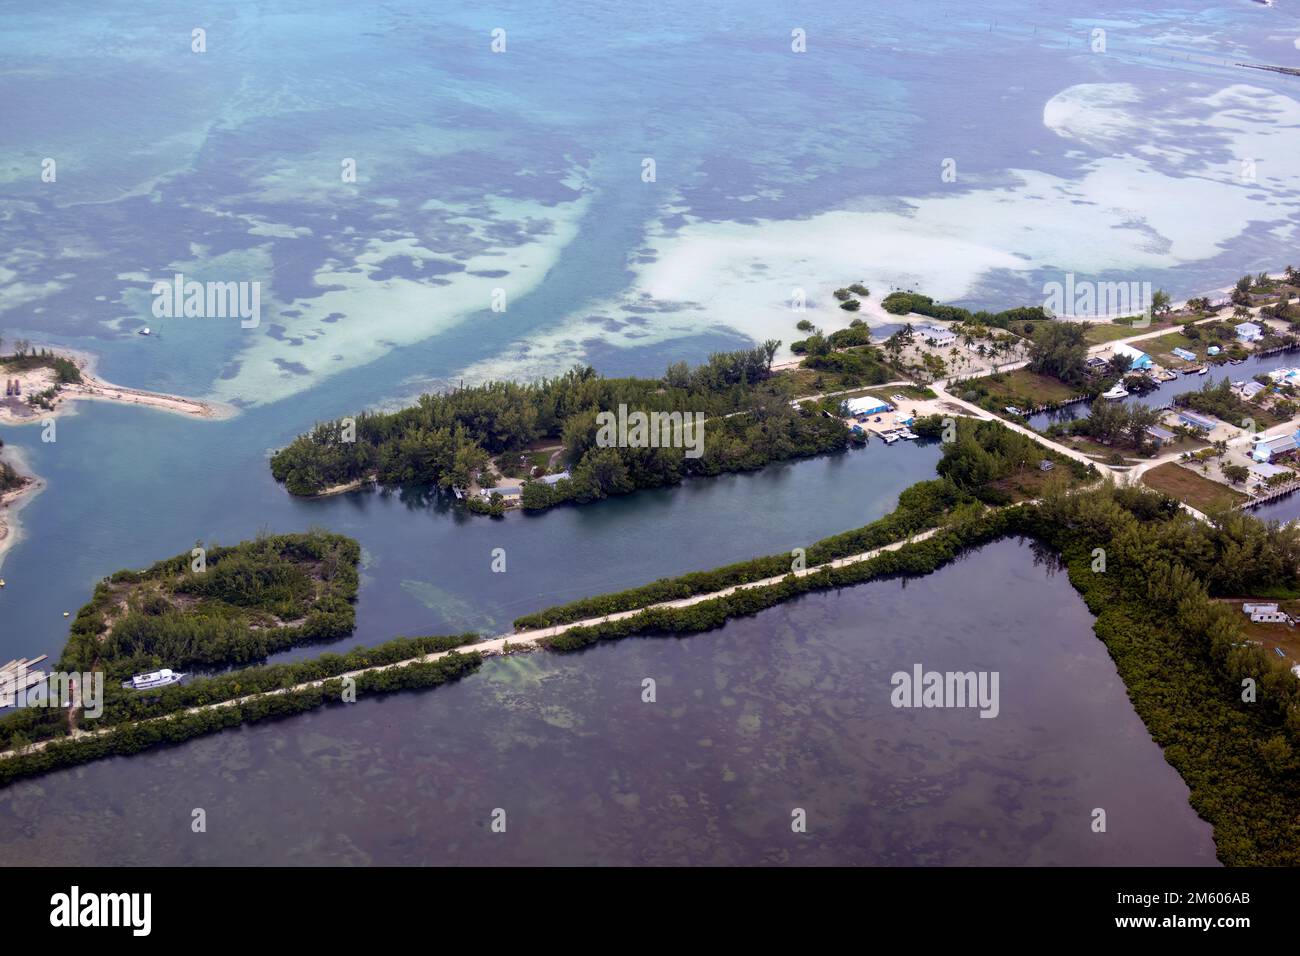 An aerial view of Nixon's Harbour in South Bimini, Bahamas Stock Photo